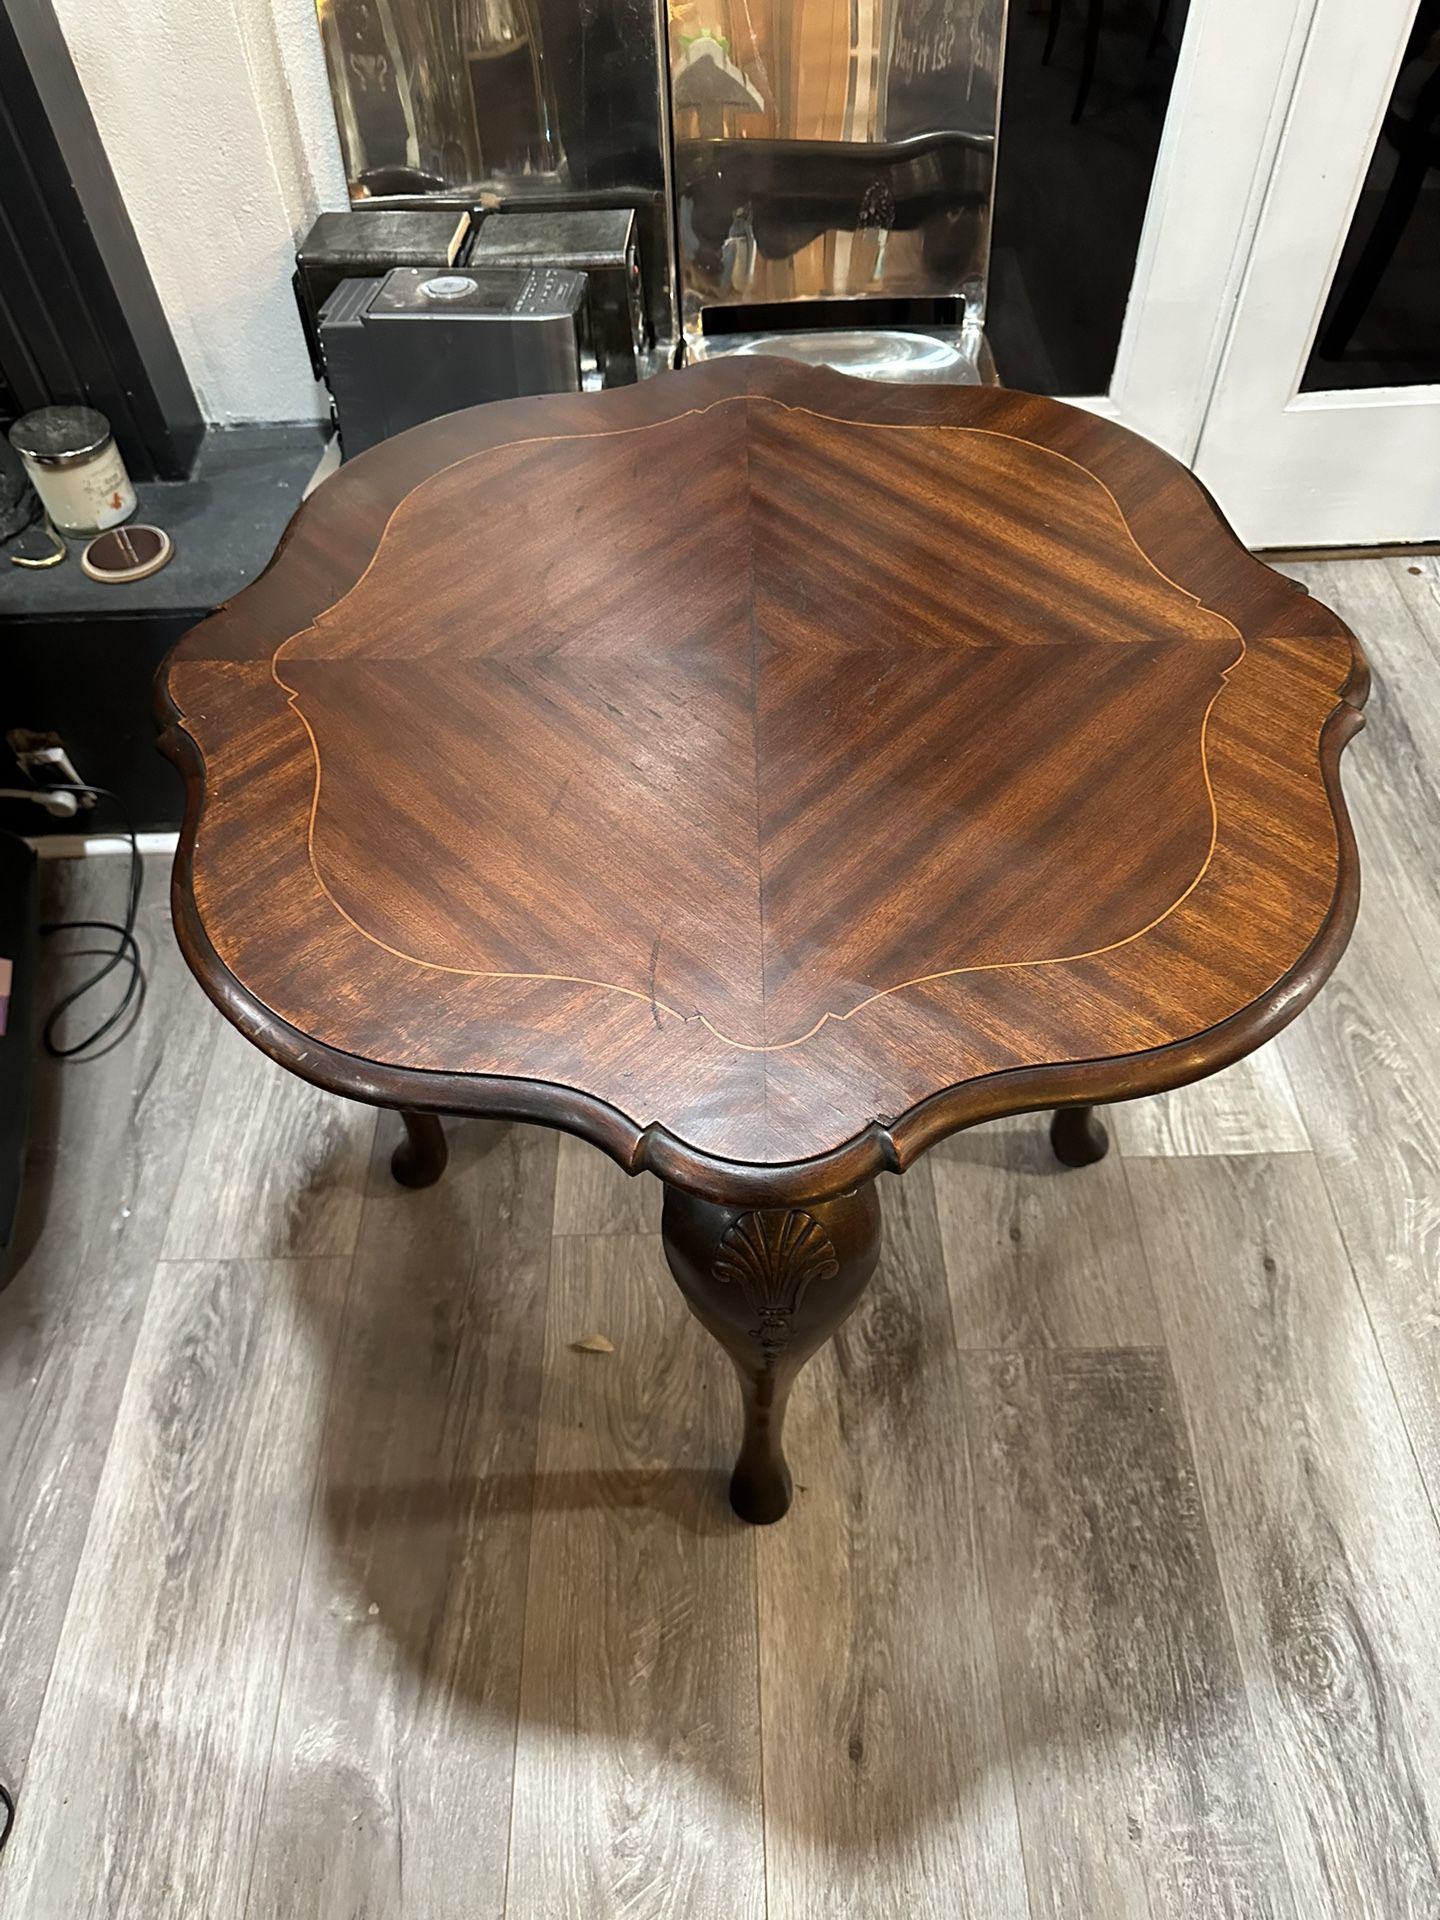 Antique Small Table (Original)